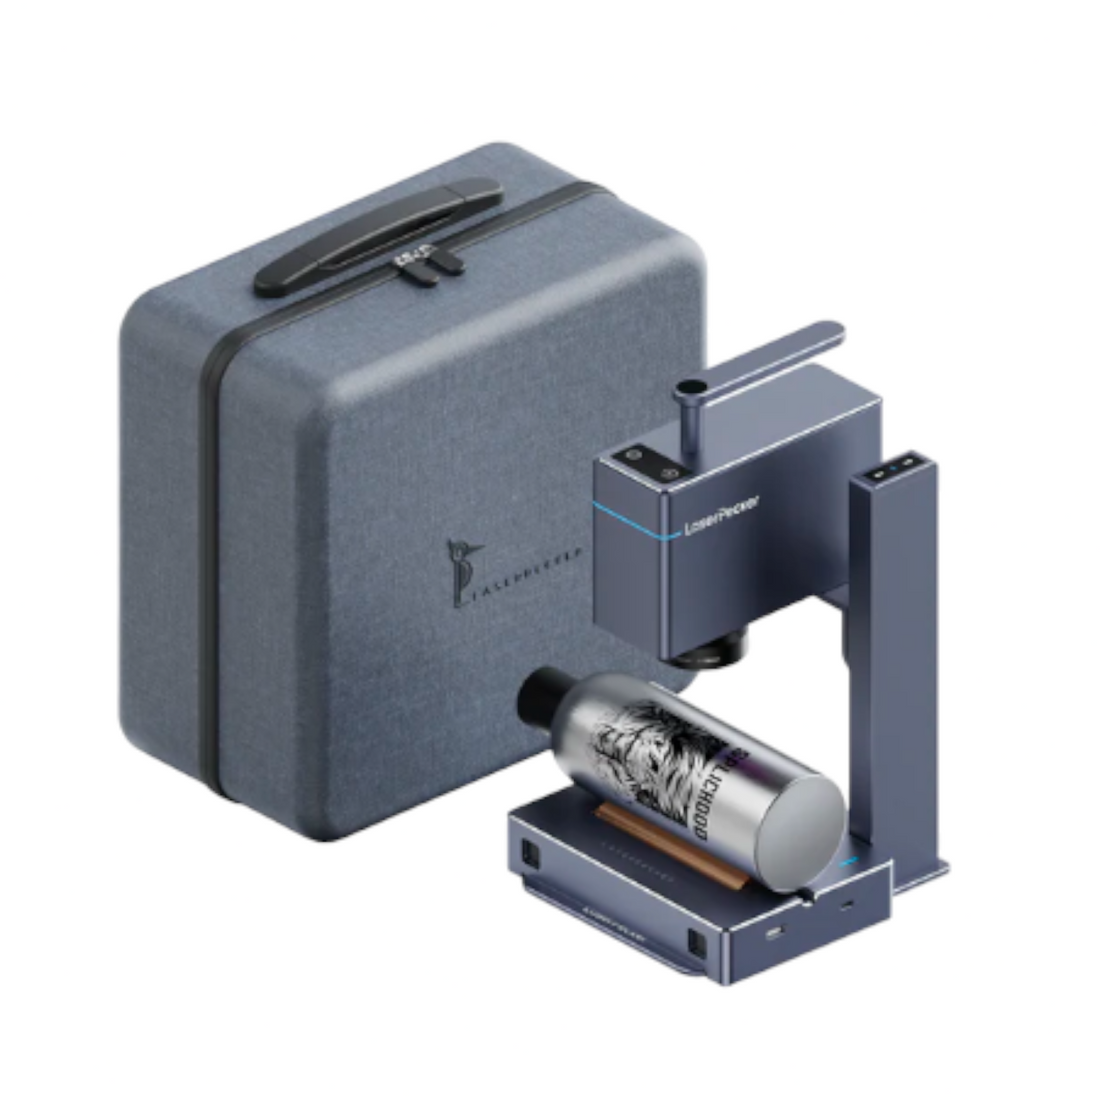 LaserPecker 3 Deluxe Portable Laser Engraving Machine